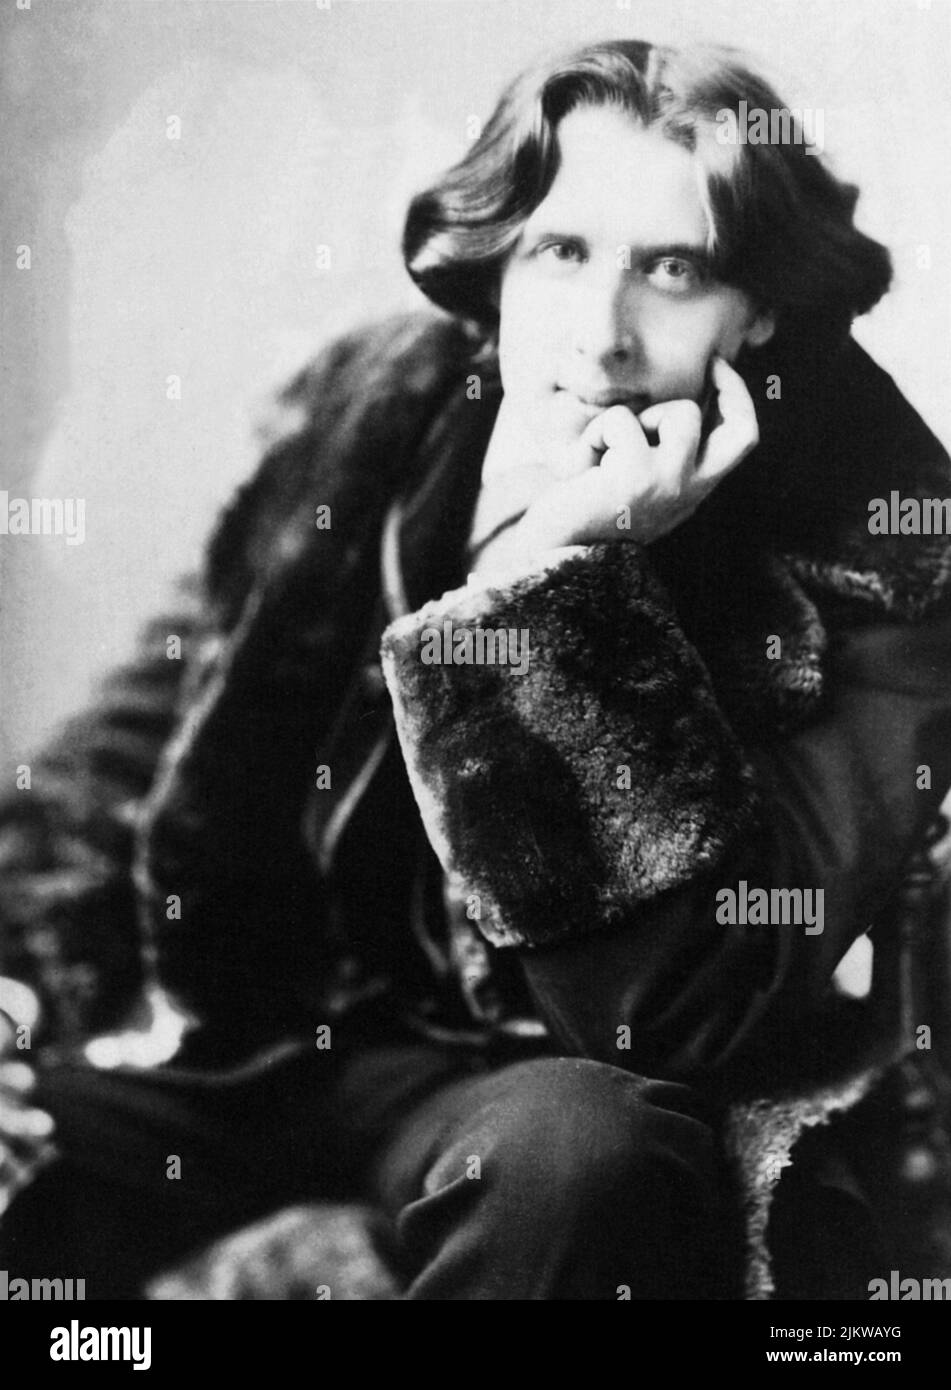 1882 , New York , USA   : The irish writer and dramatist OSCAR WILDE ( 1854 - 1900 ) , photo by Napoleon Sarony  - SCRITTORE - LETTERATURA - LITERATURE - POET - POETA - POESIA - DRAMMATURGO - playwriter - play-writer - TEATRO - THEATER - THEATRE  - POETRY  - DANDY - GAY - HOMOSEXUALITY - HOMOSEXUAL - omosessuale - omosessualità - pelliccia - fur  ----  Archivio GBB Stock Photo